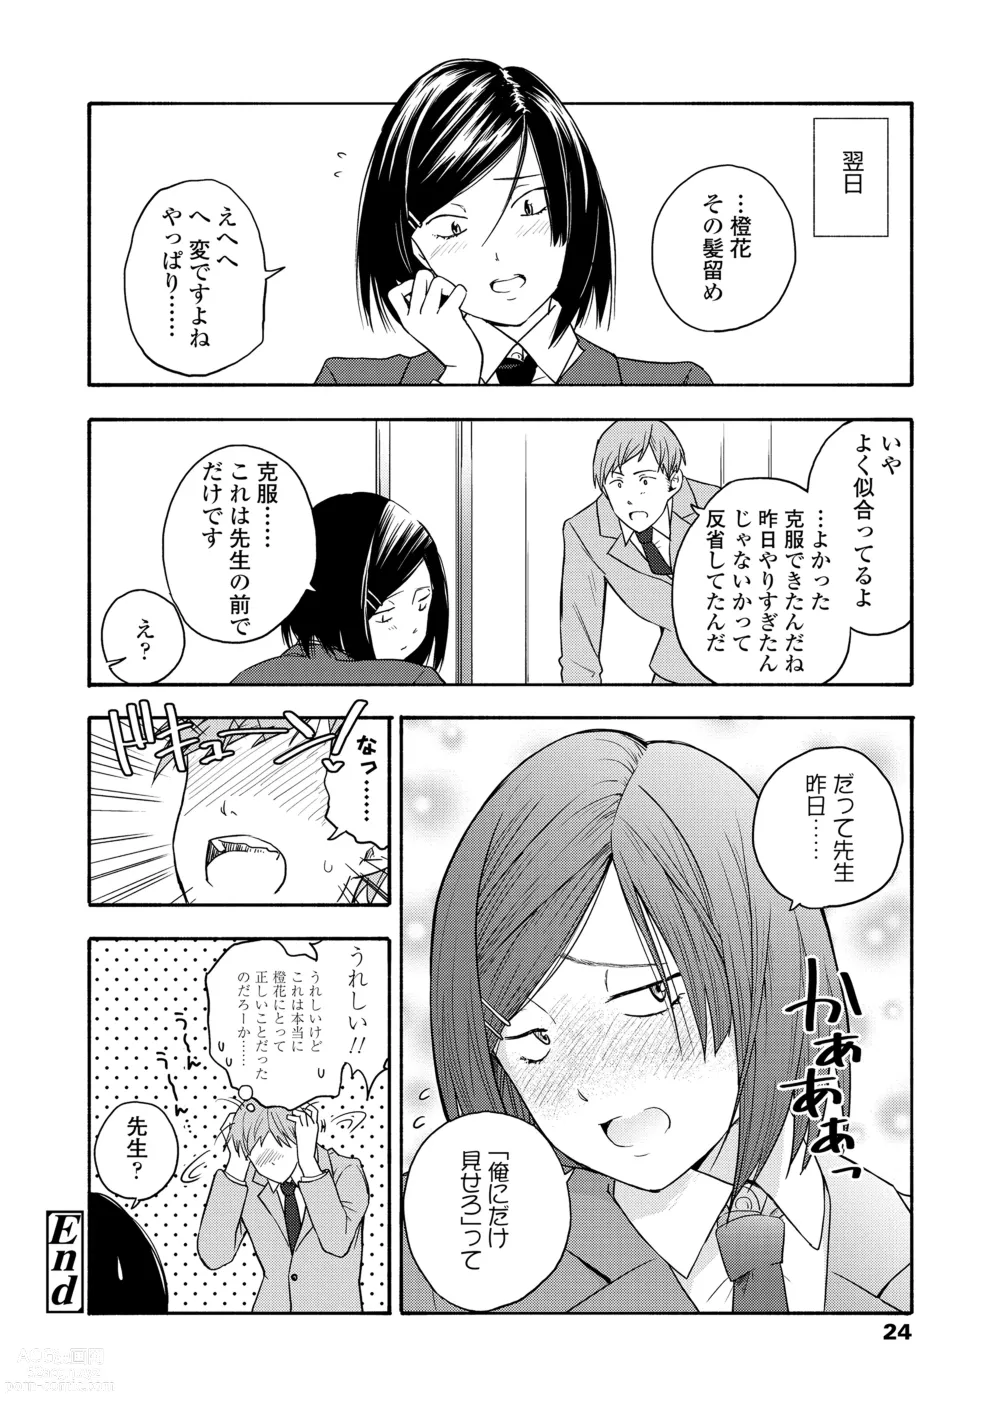 Page 26 of manga Shishunki no Eros - puberty eros + DLsite Kounyu Tokuten